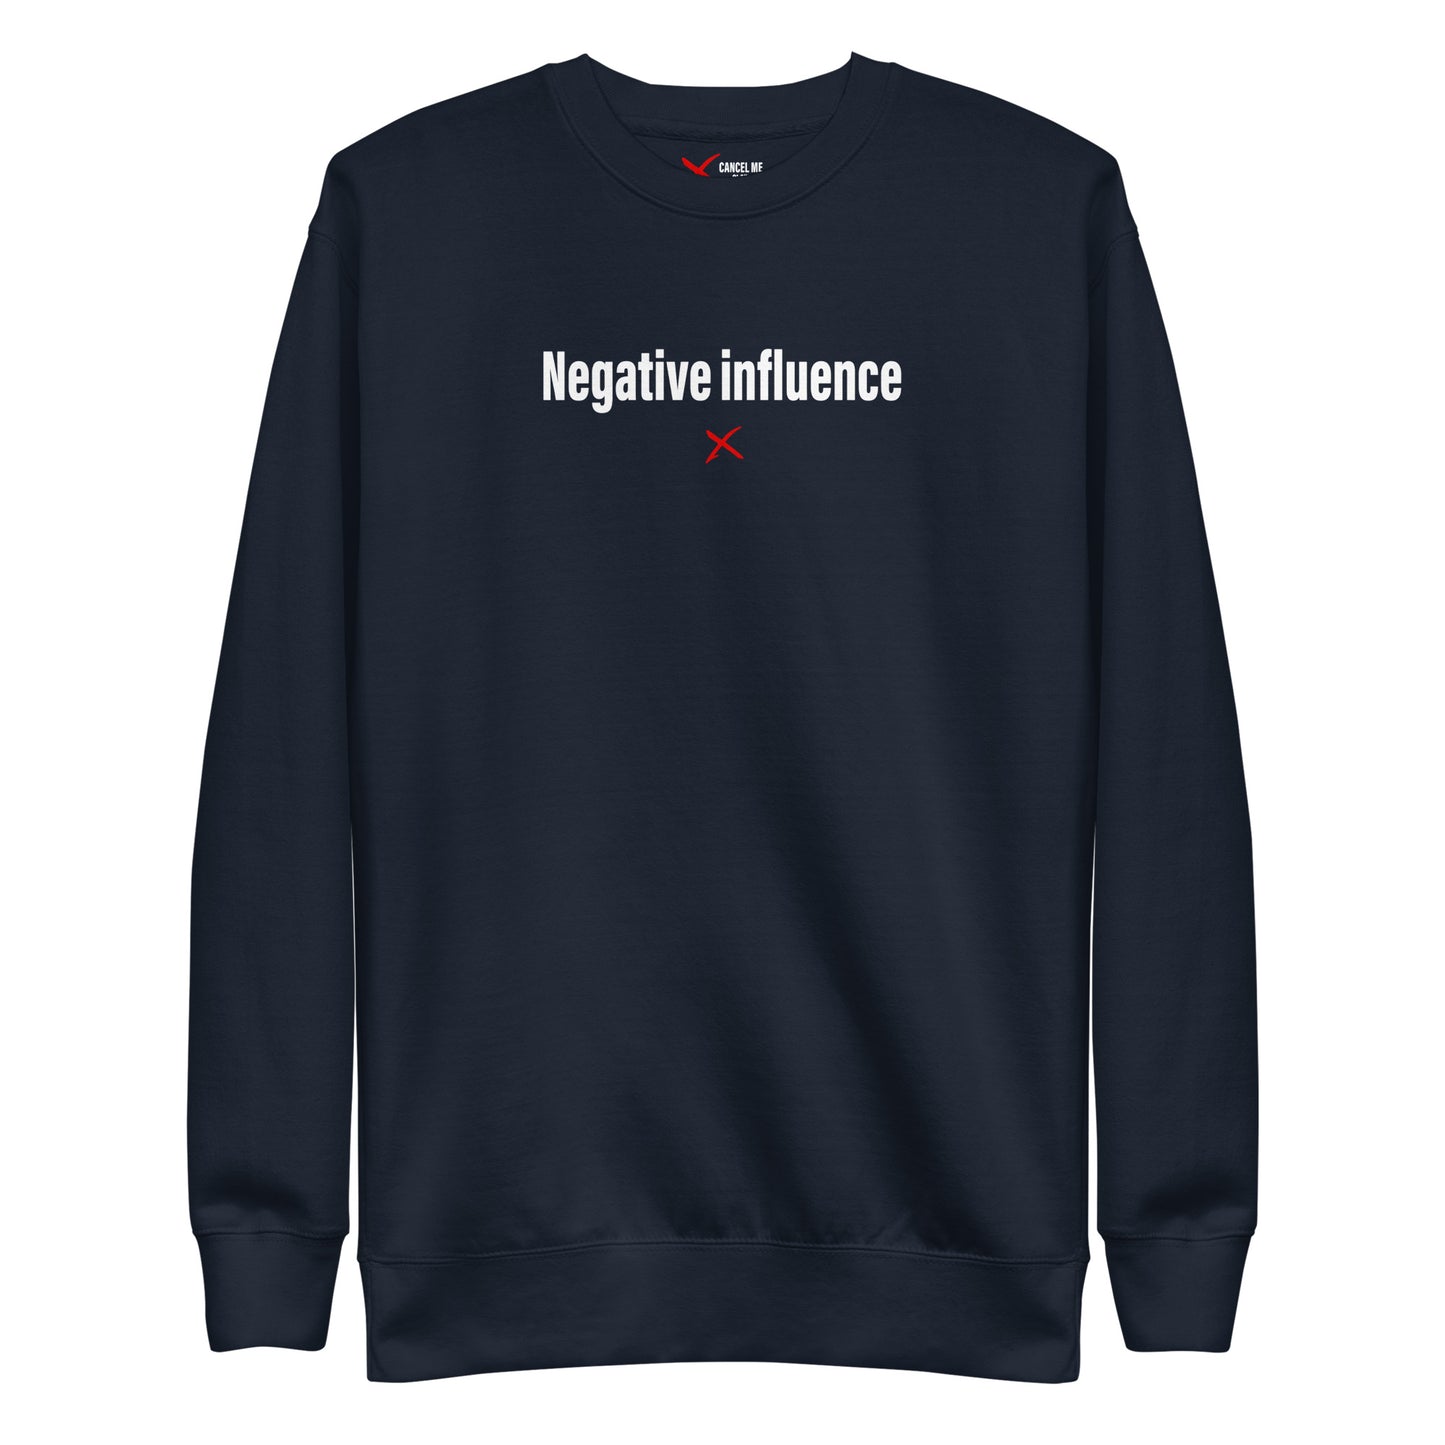 Negative influence - Sweatshirt